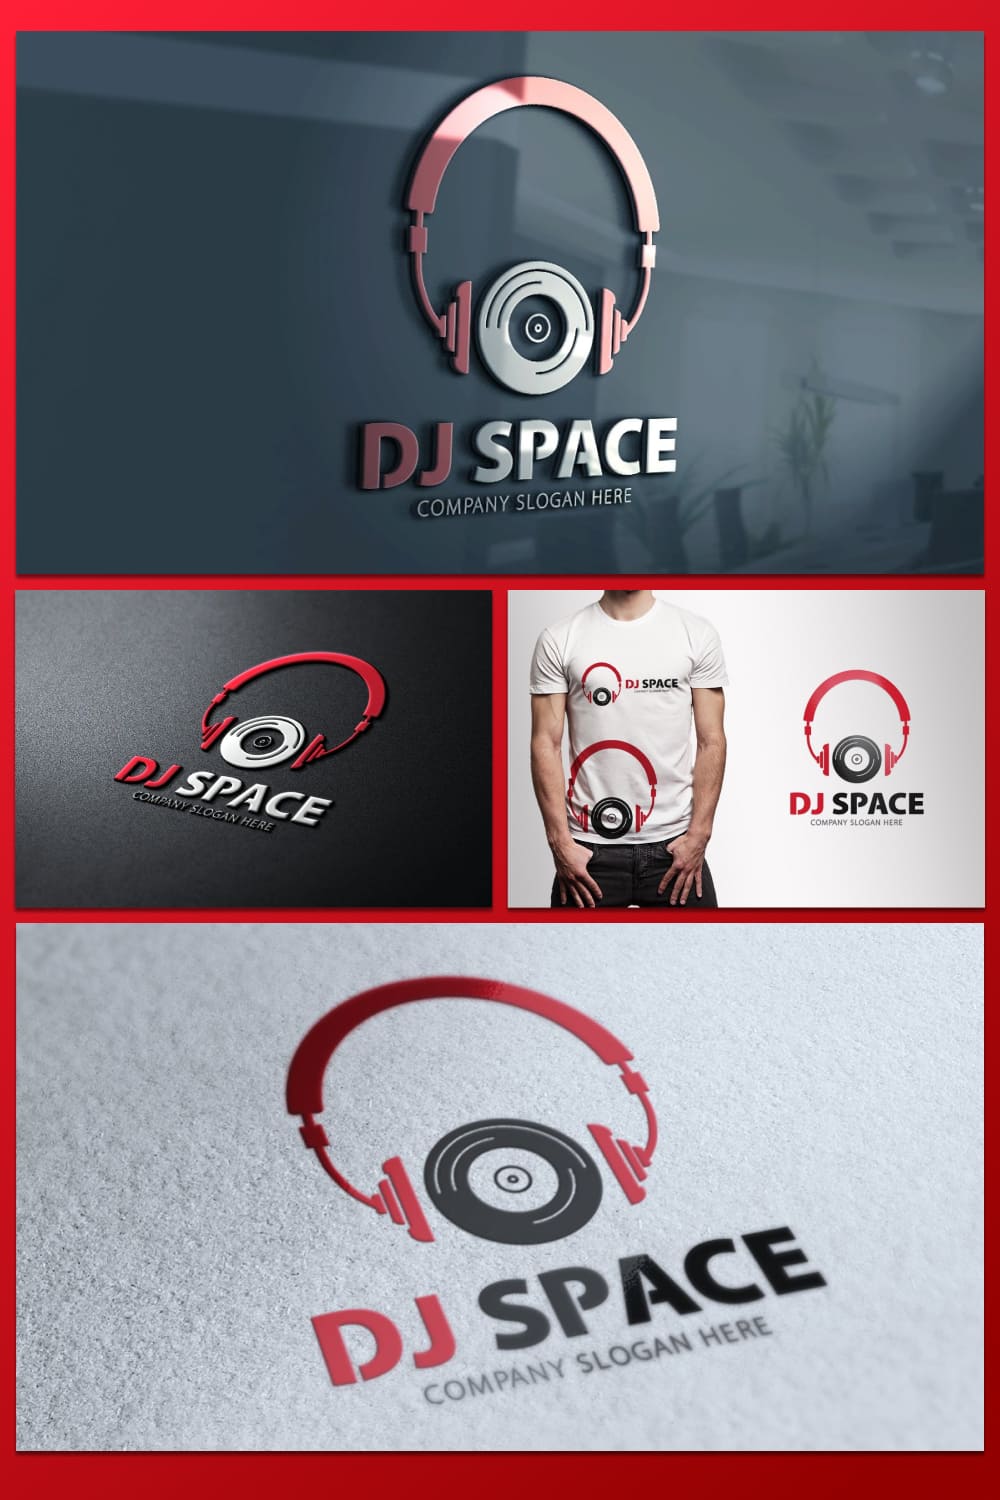 dj space logo bright design templates.